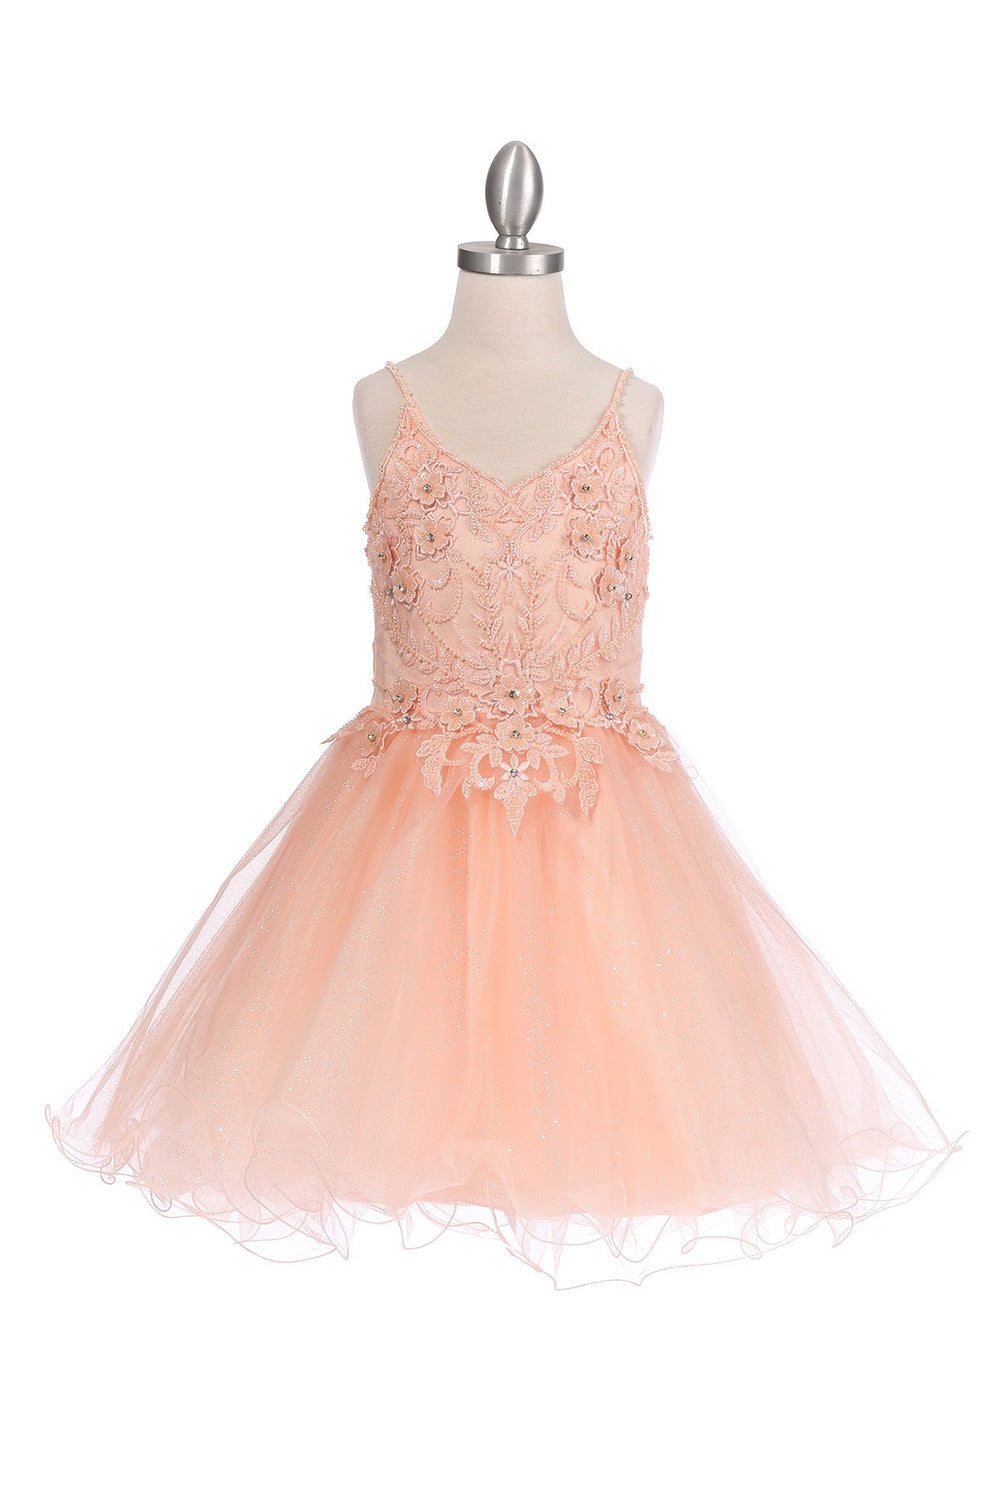 Elegant Illusion Sparkly Tulle A-Line Short Kids Dress CU5112 Elsy Style Kids Dress